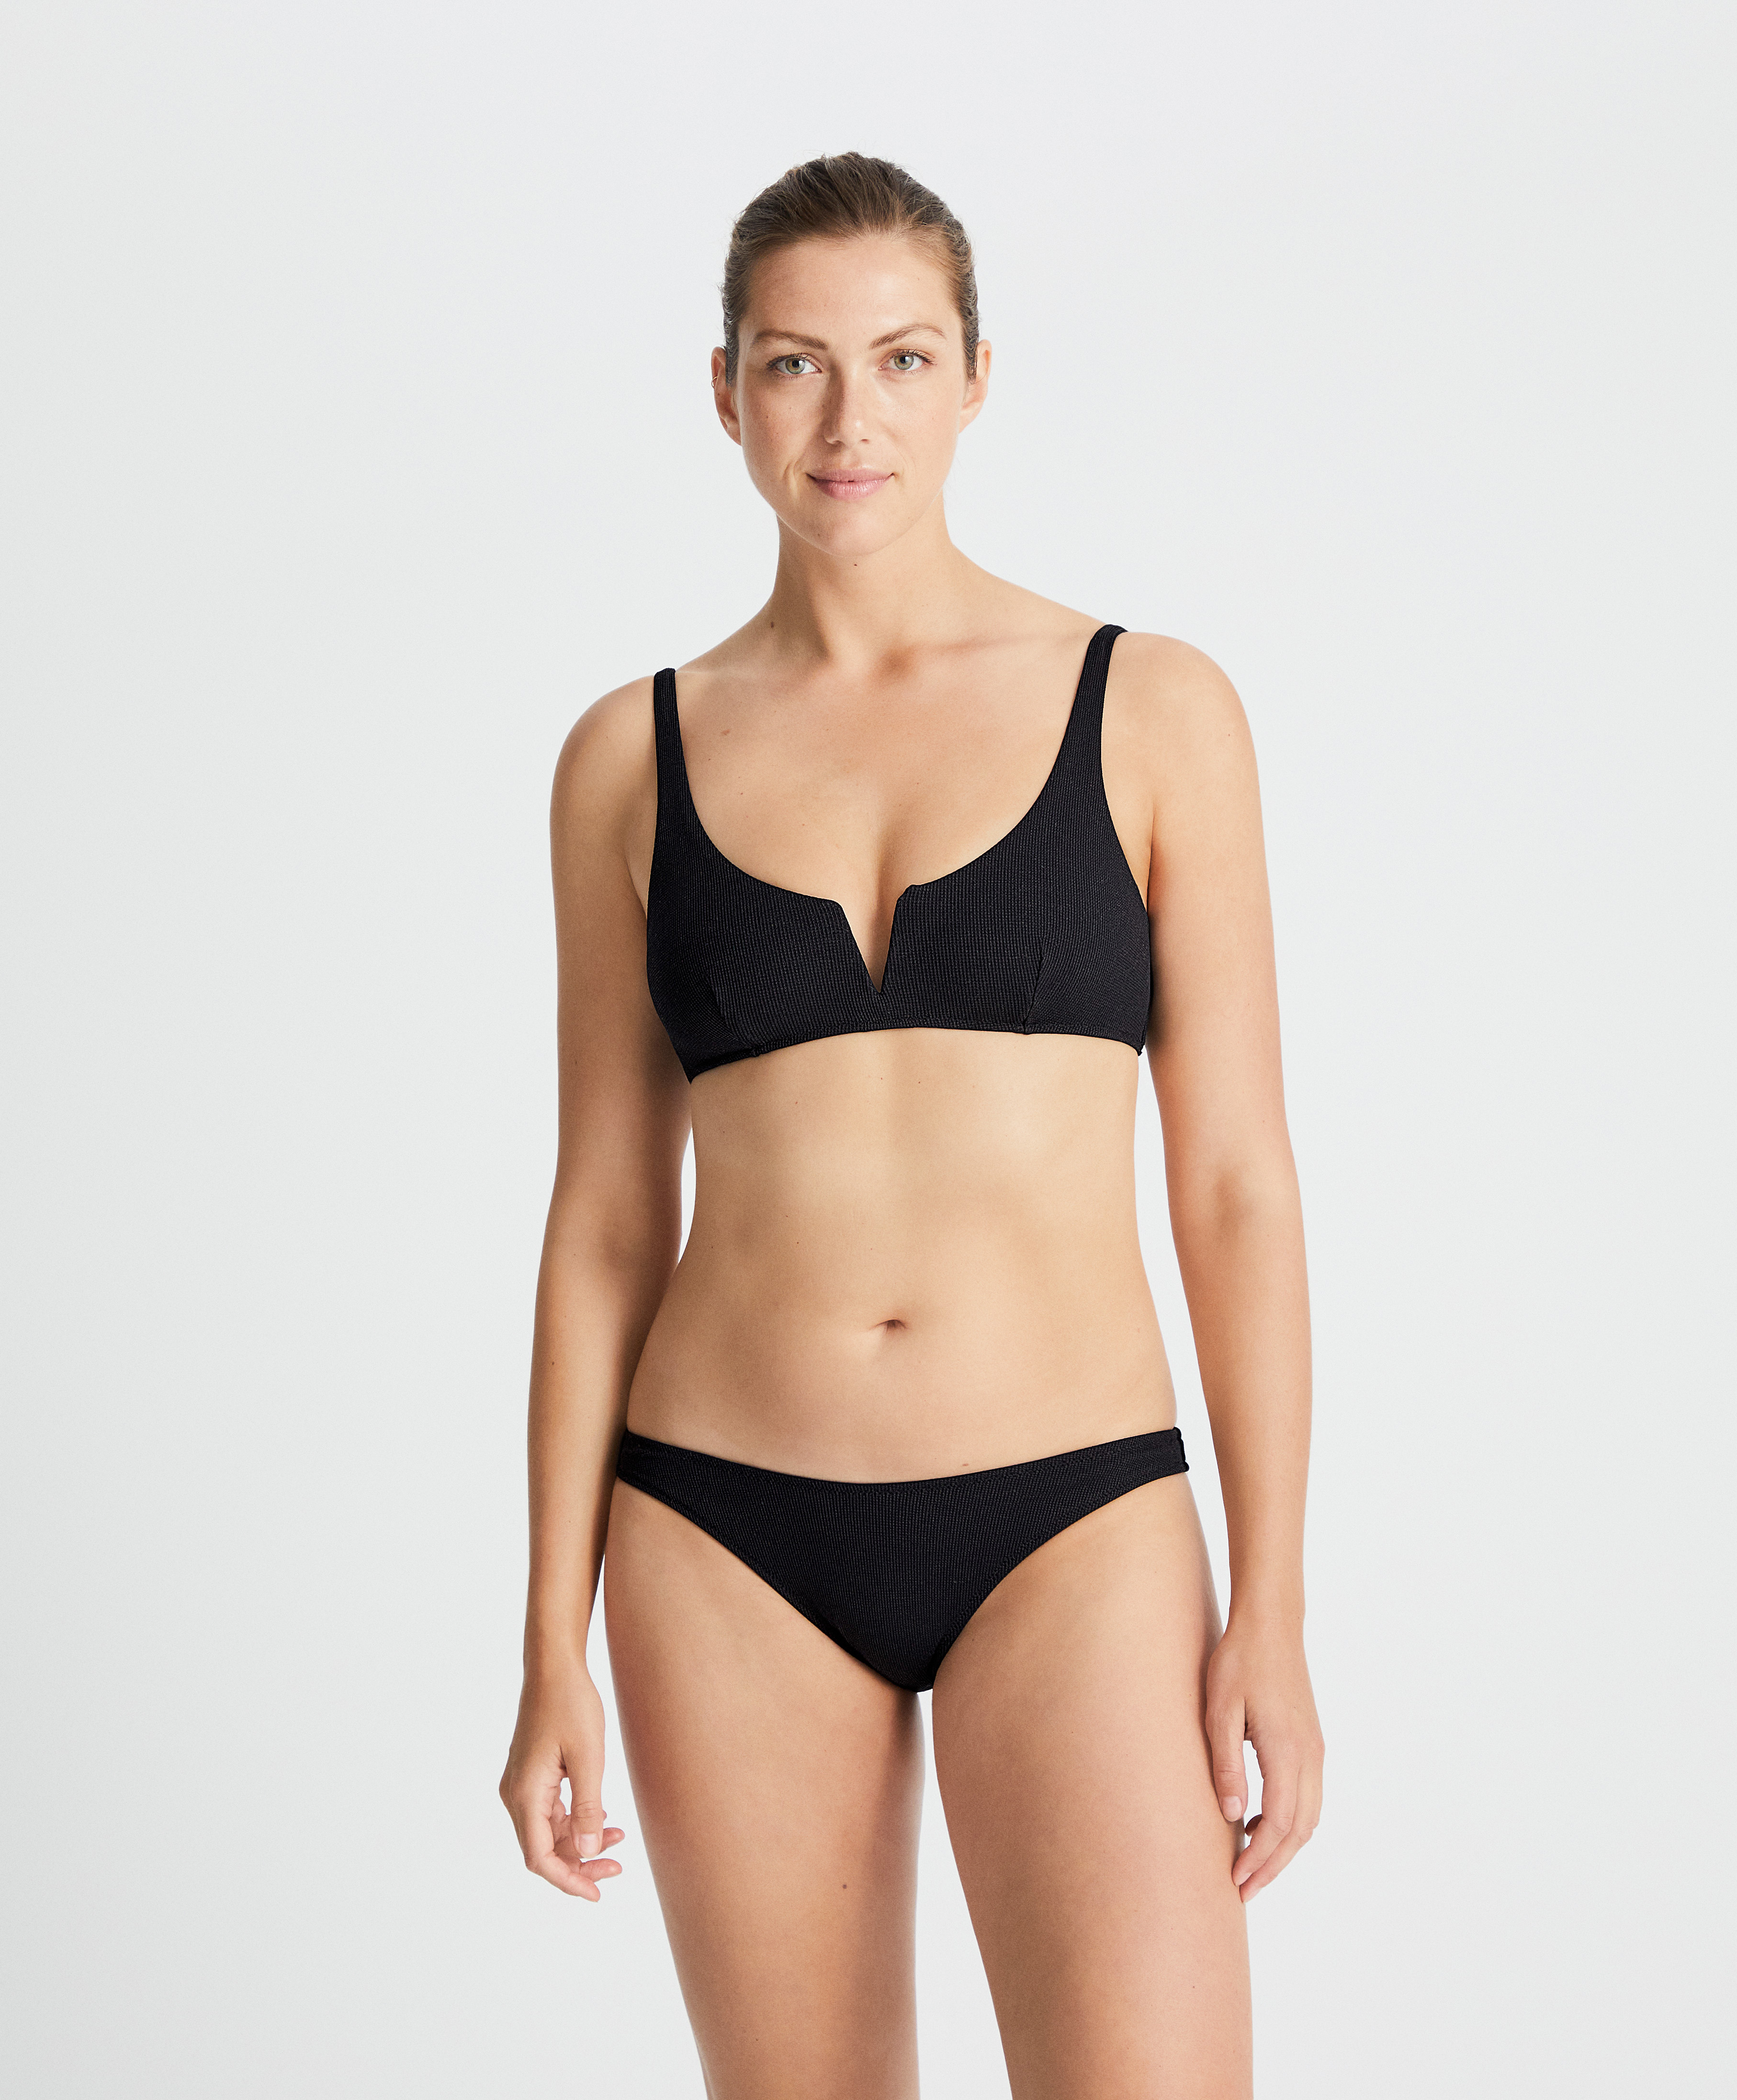 Piqué halter bikini top and medium-coverage briefs